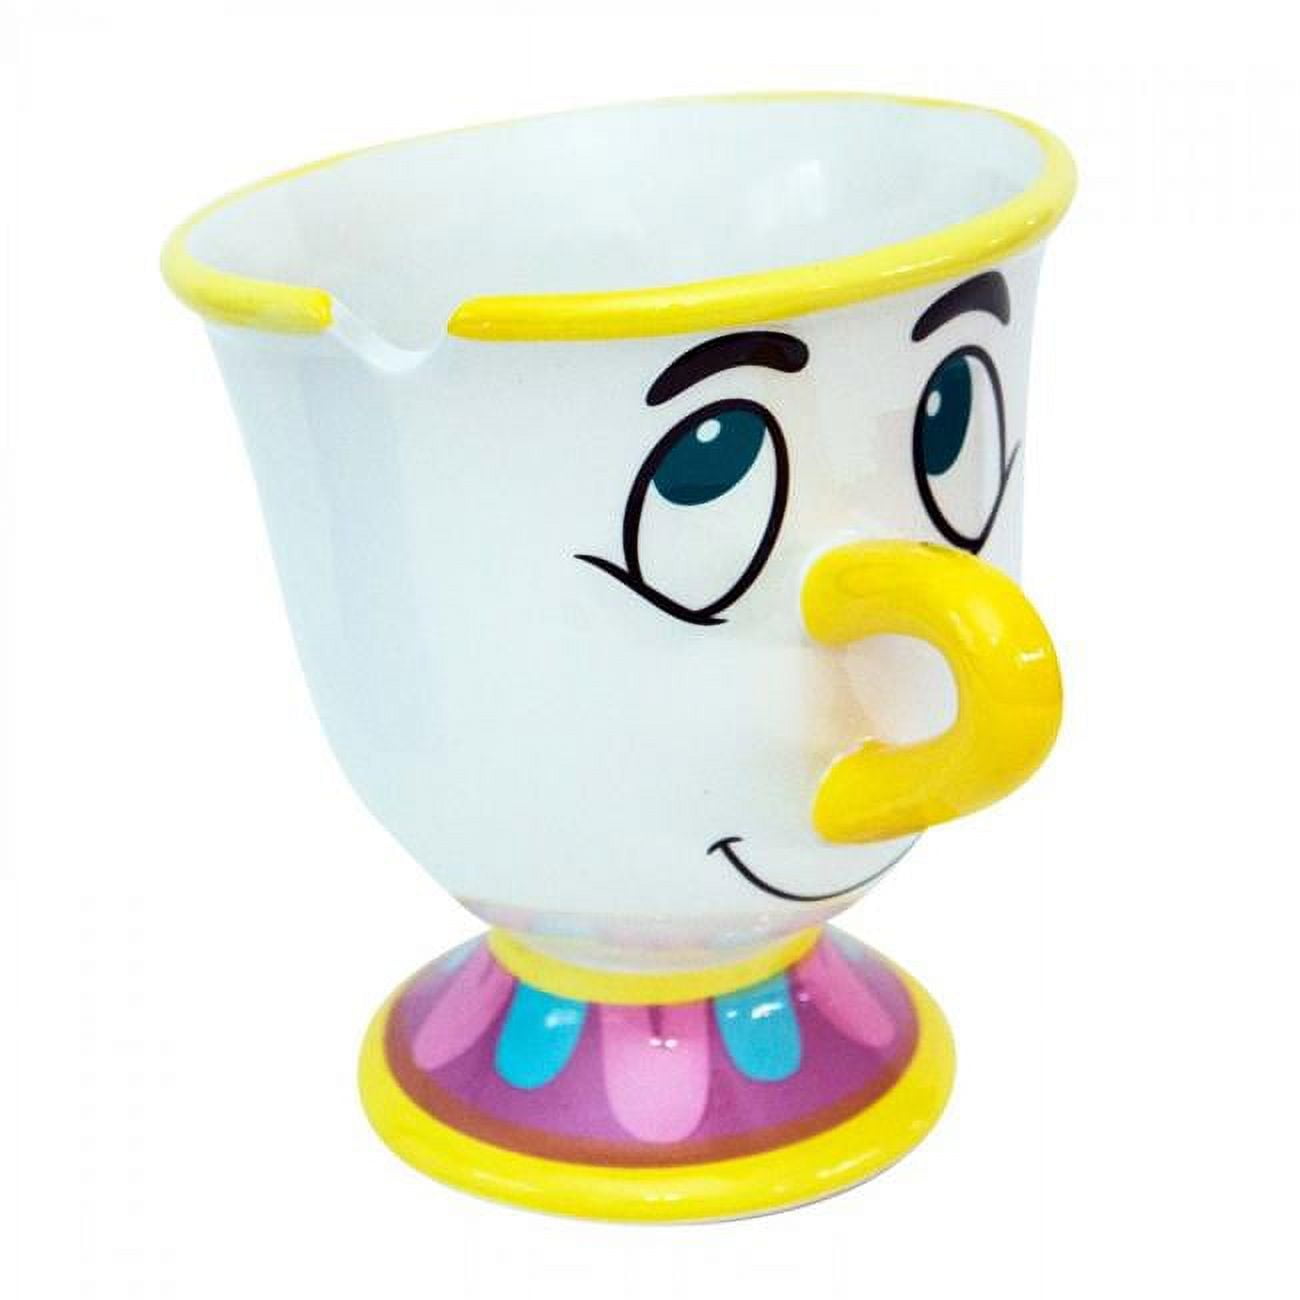 Disney Chip Mug Beauty and the Beast Coffee Mugs with Gold Foil 8 Ounces 